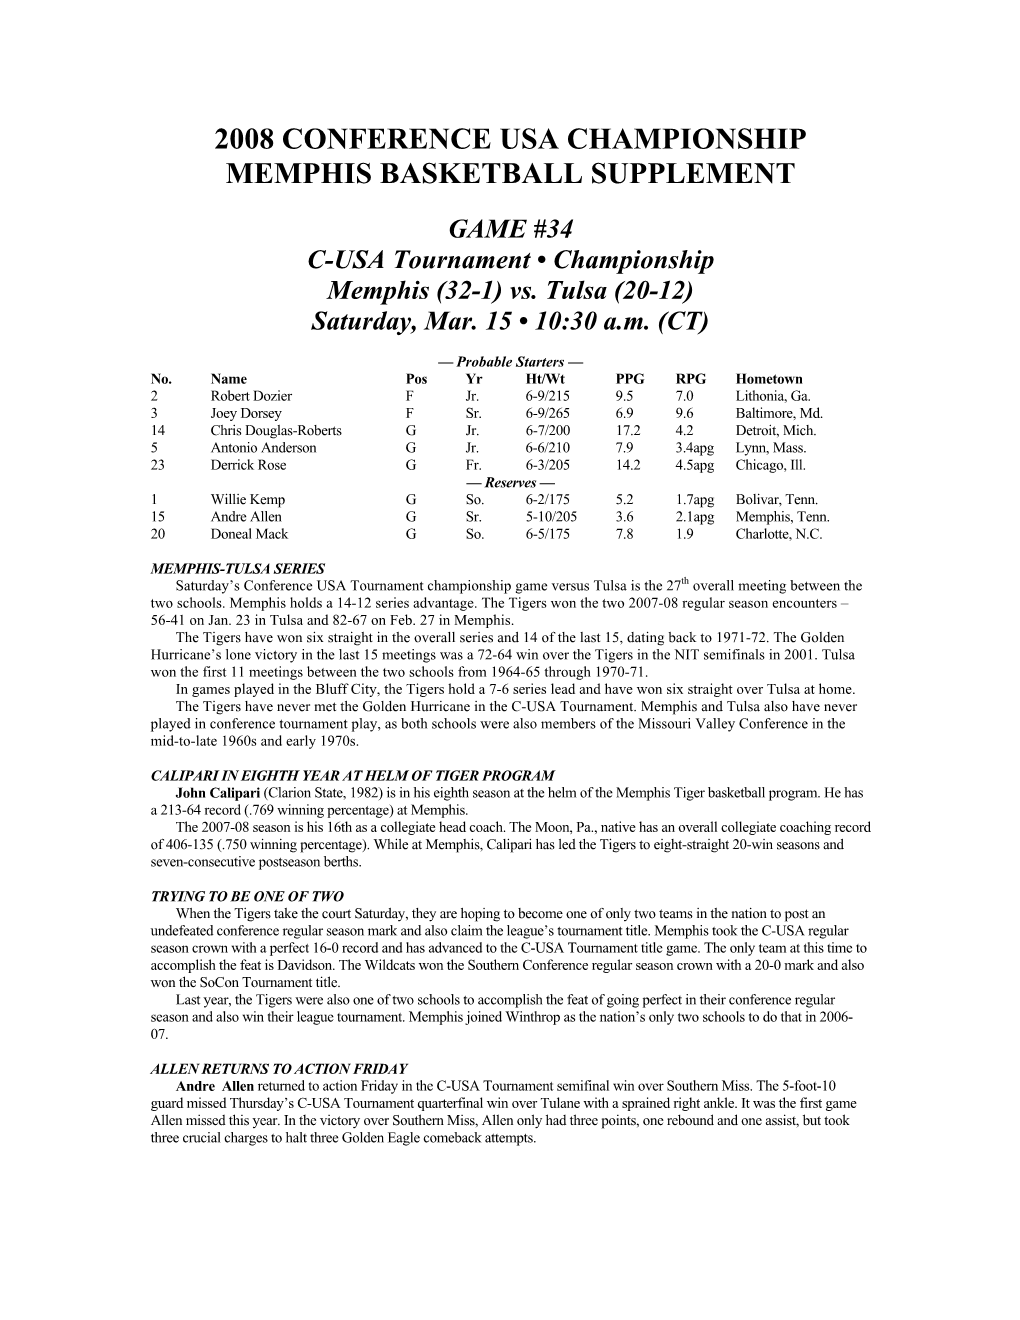 2008 Conference Usa Championship Memphis Basketball Supplement